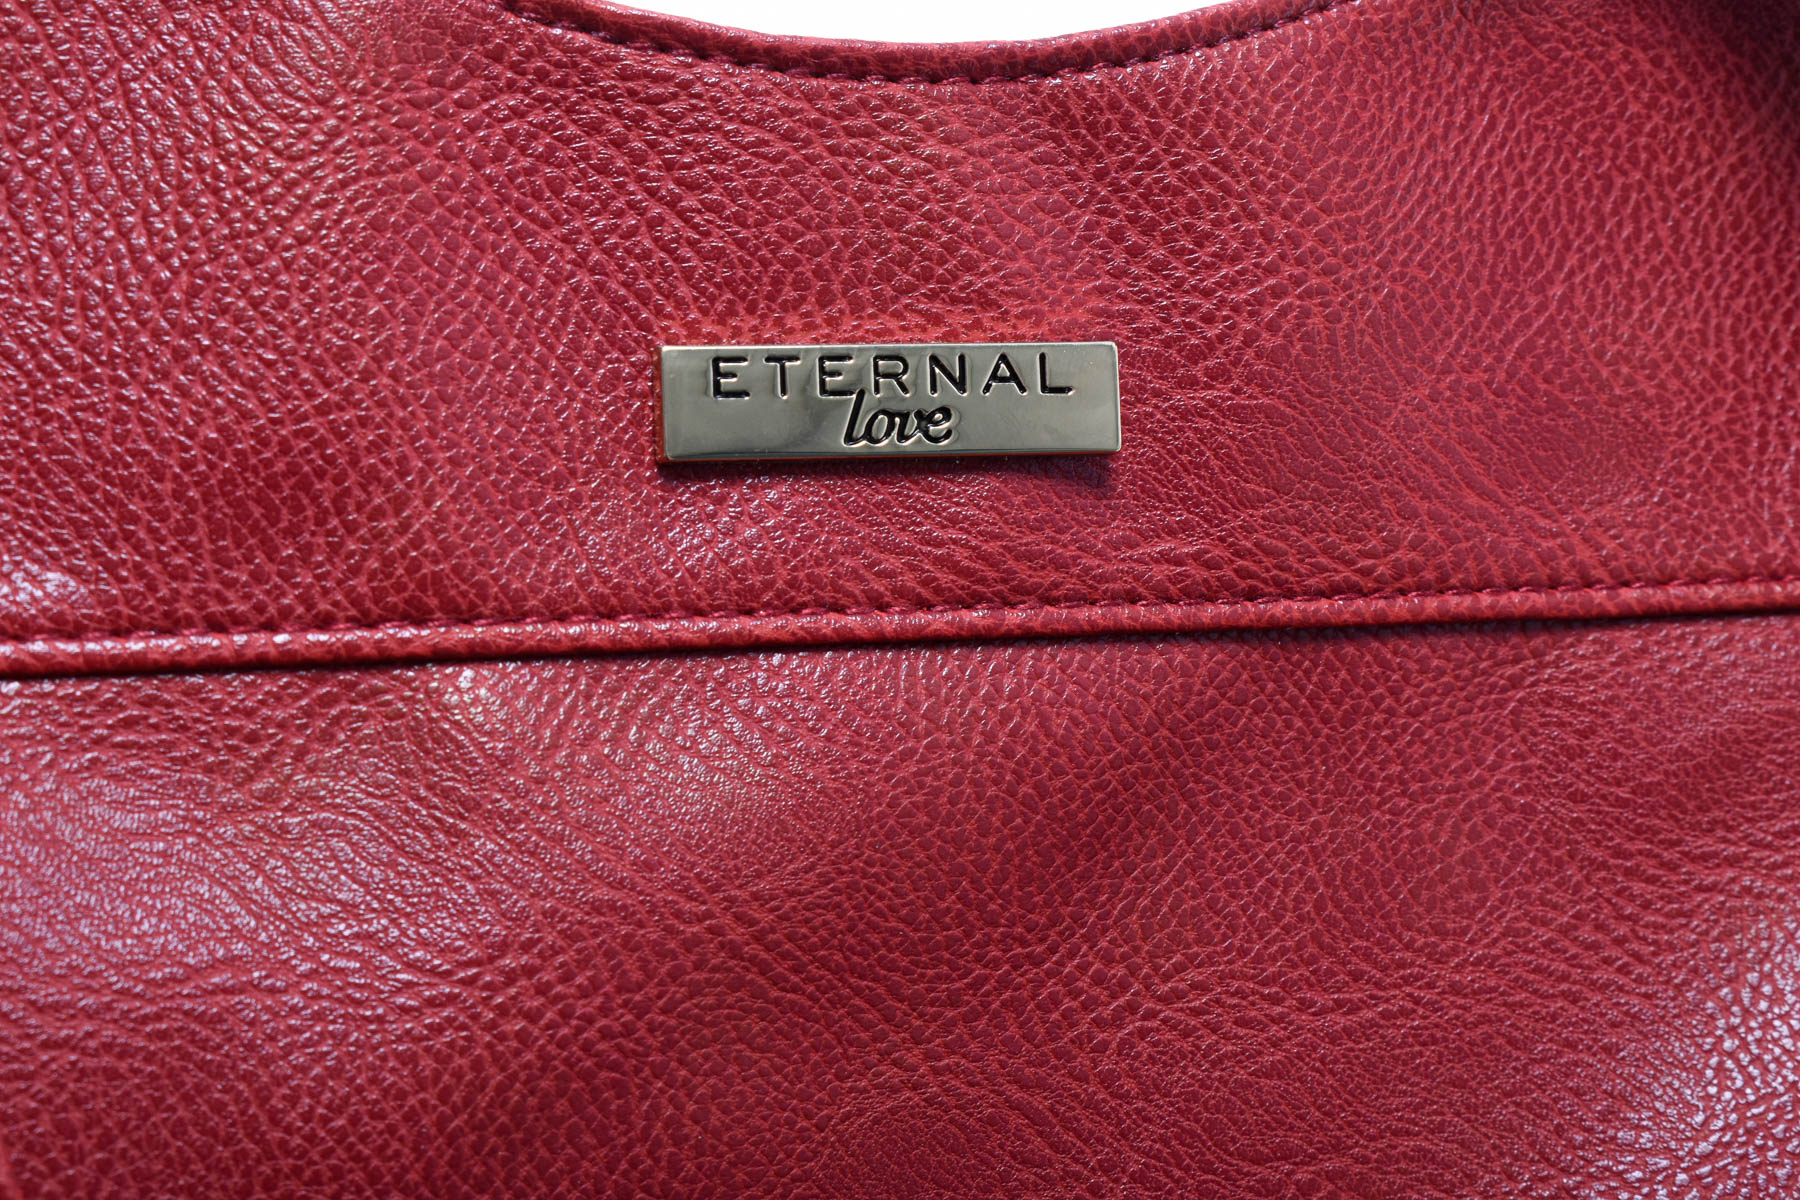 Women's bag - ETERNAL love - 3